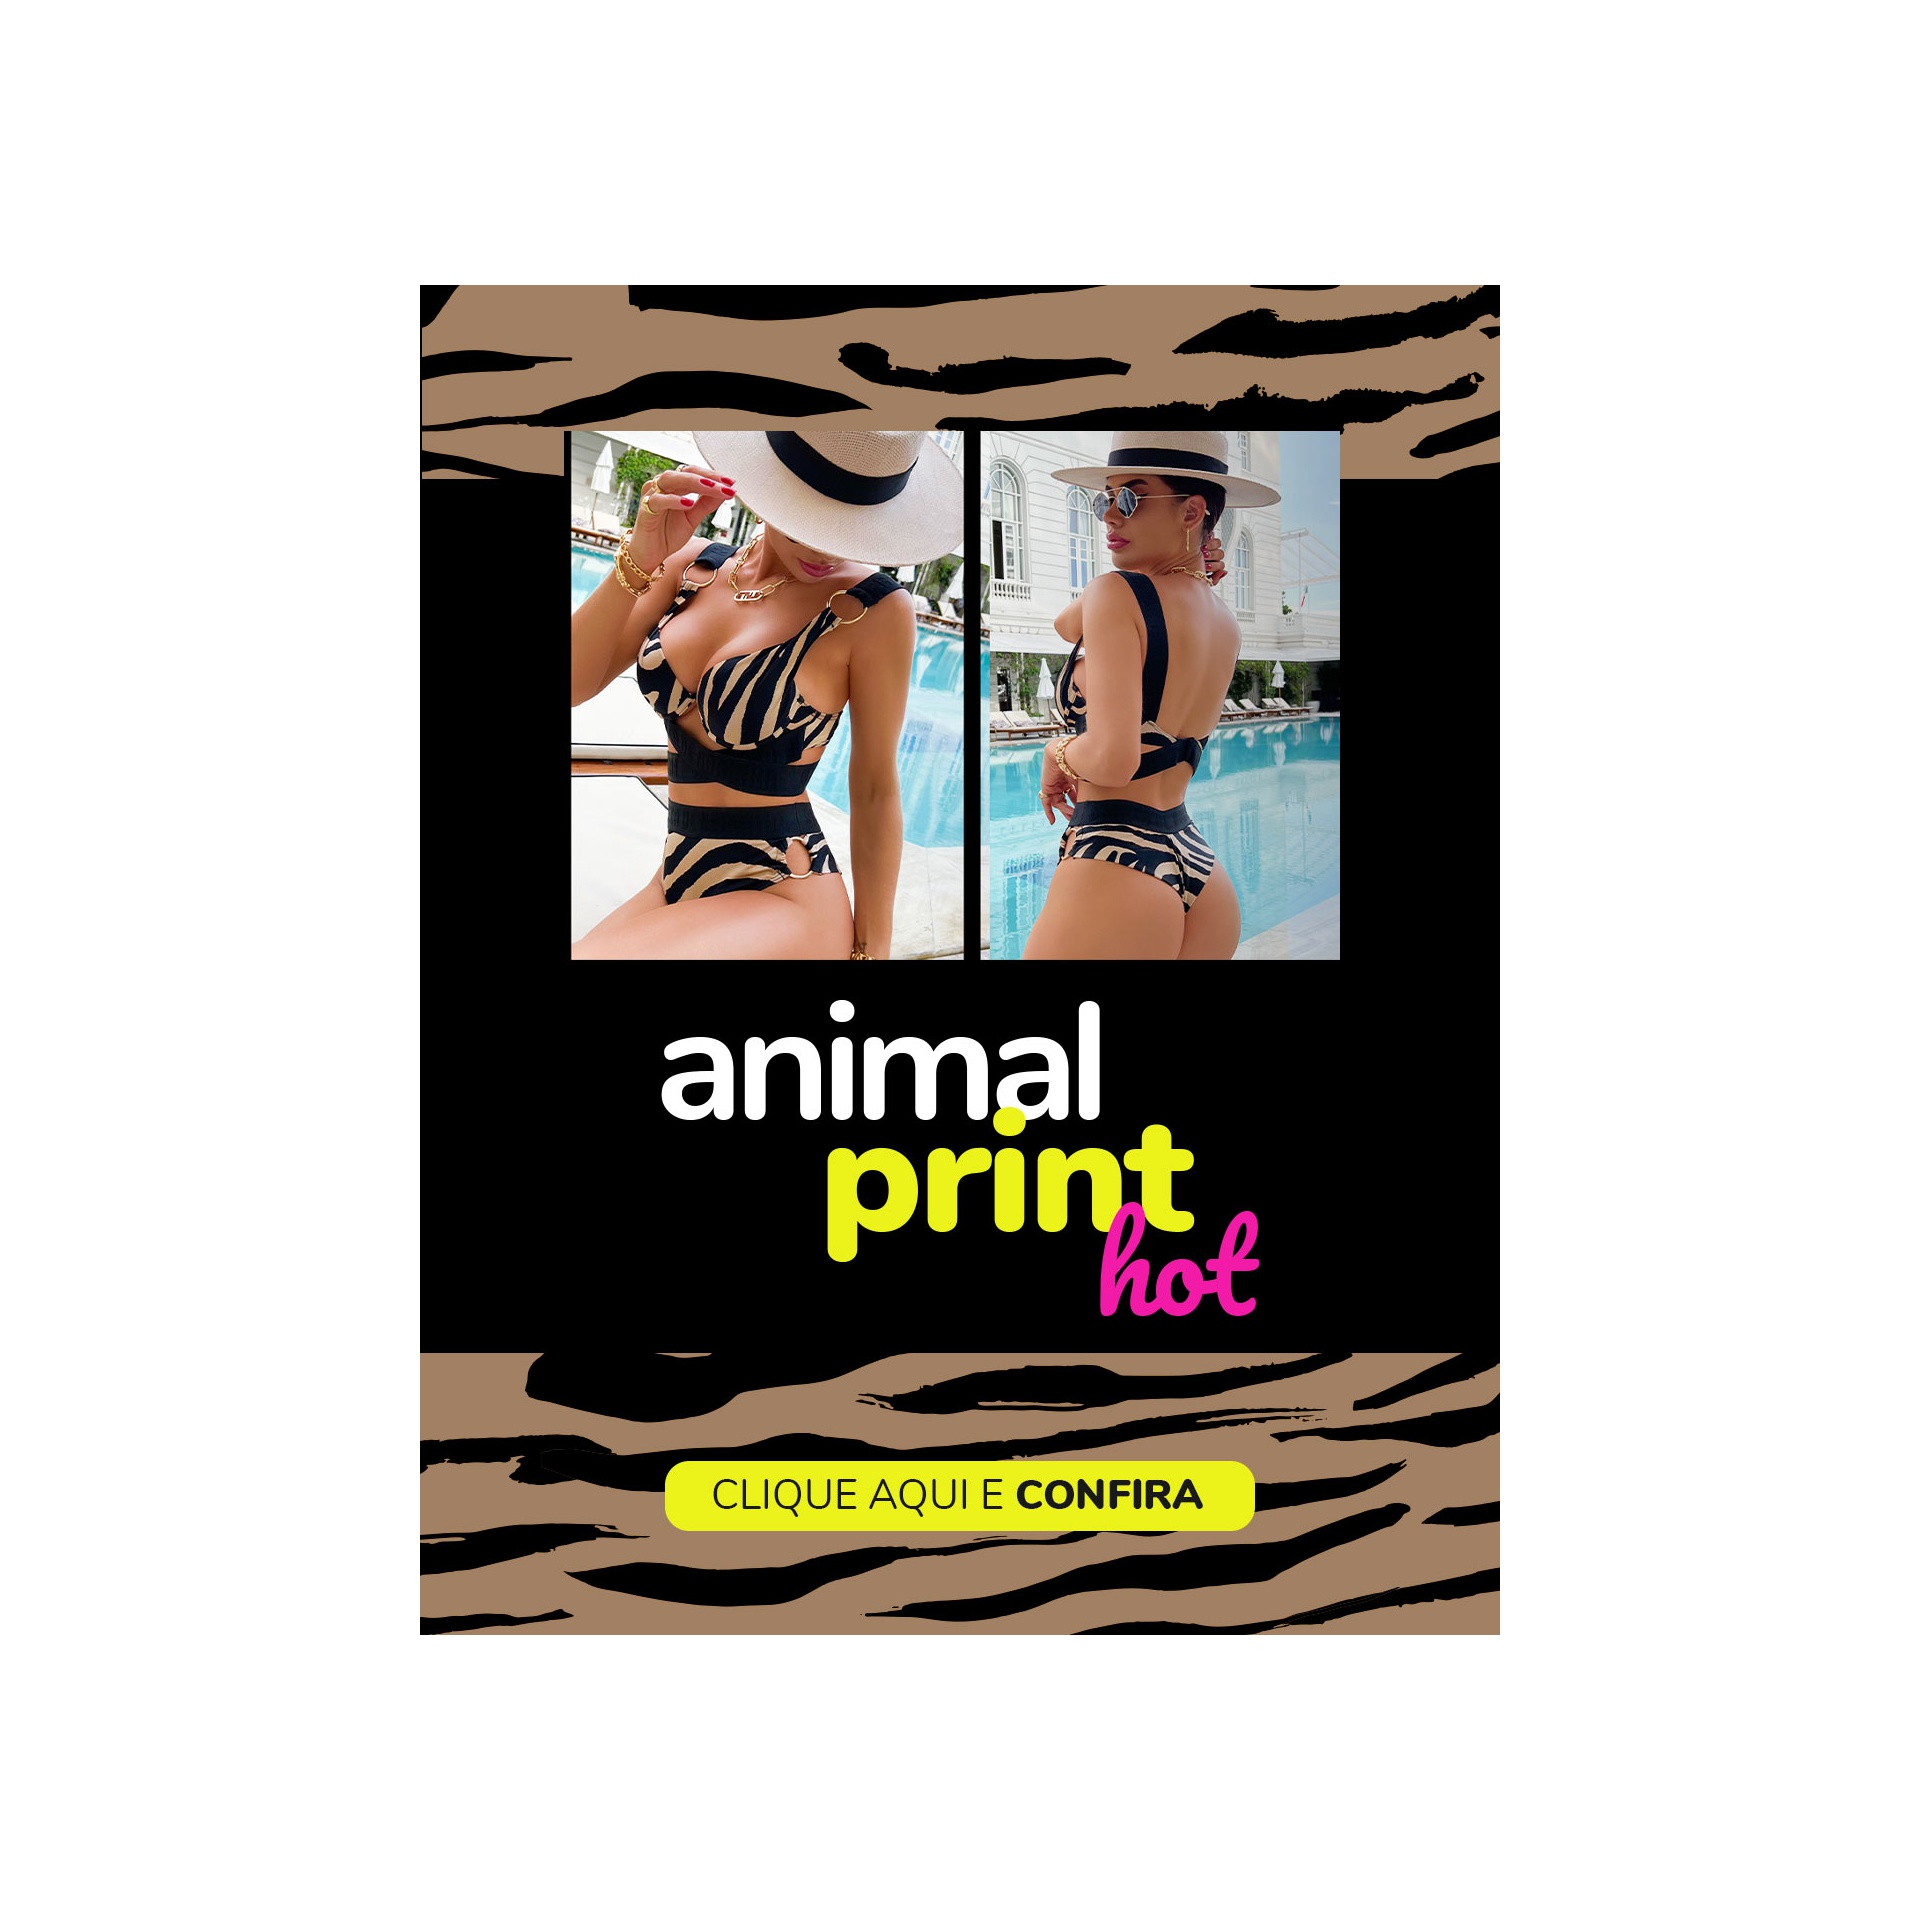 Animal print hot